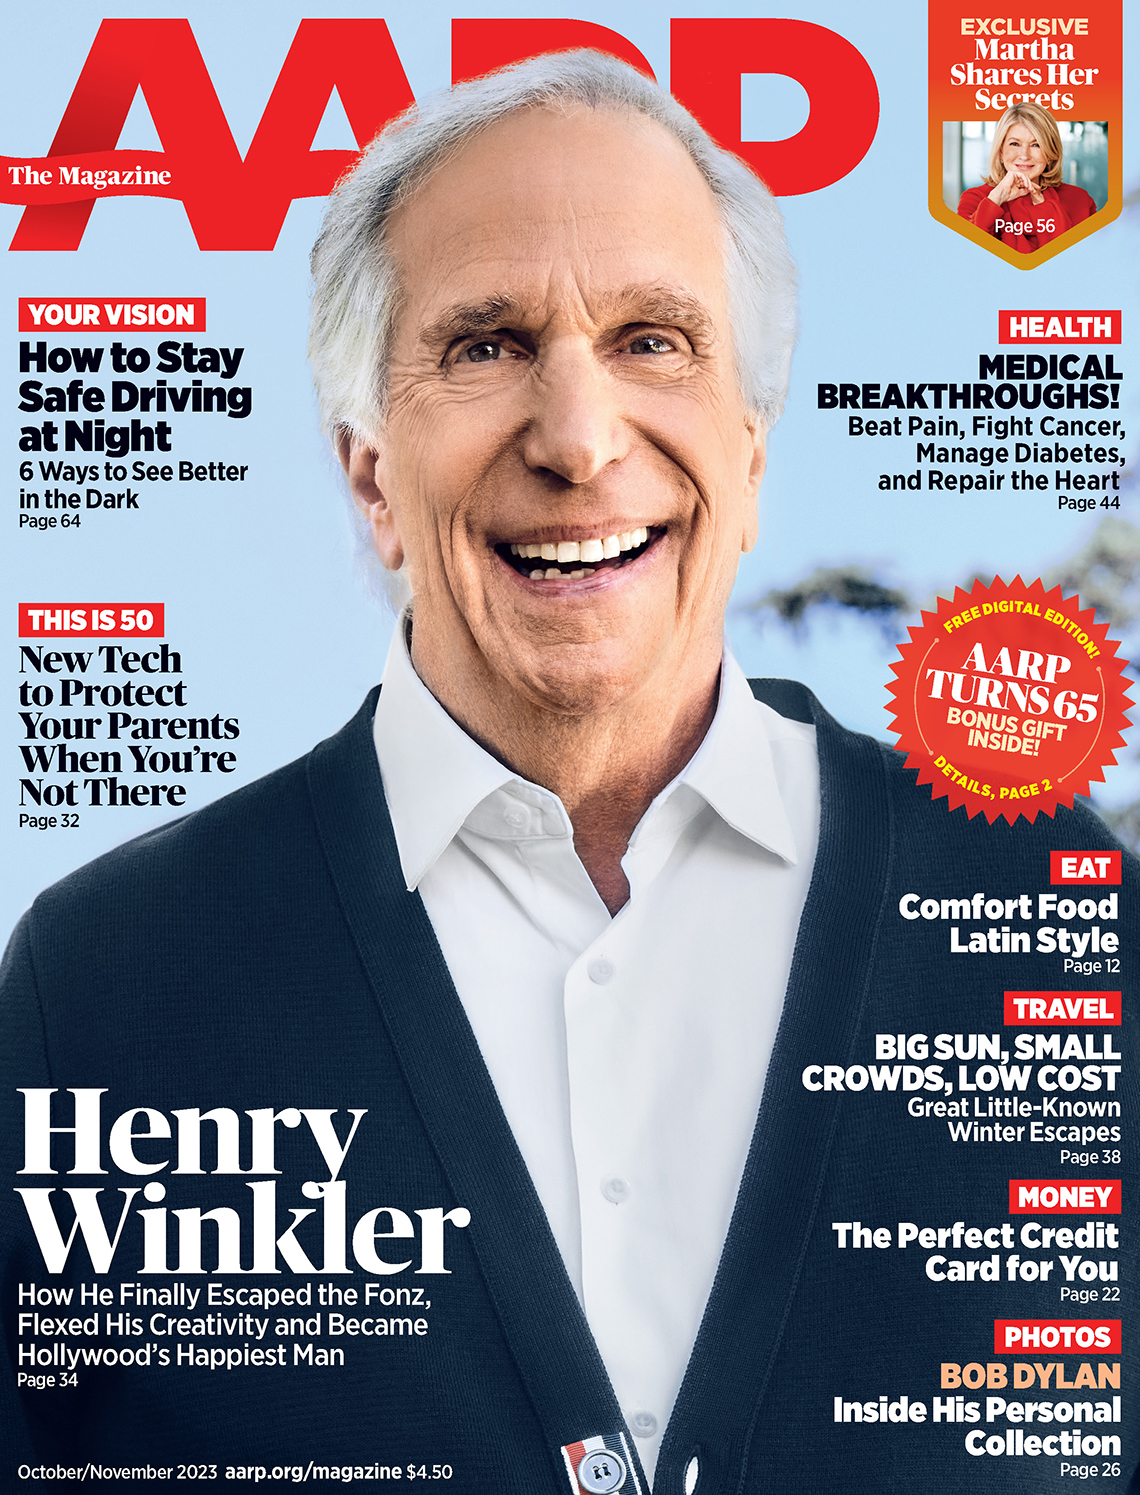 AARP The Magazine October/November 2023 Issue featuring Henry Winkler